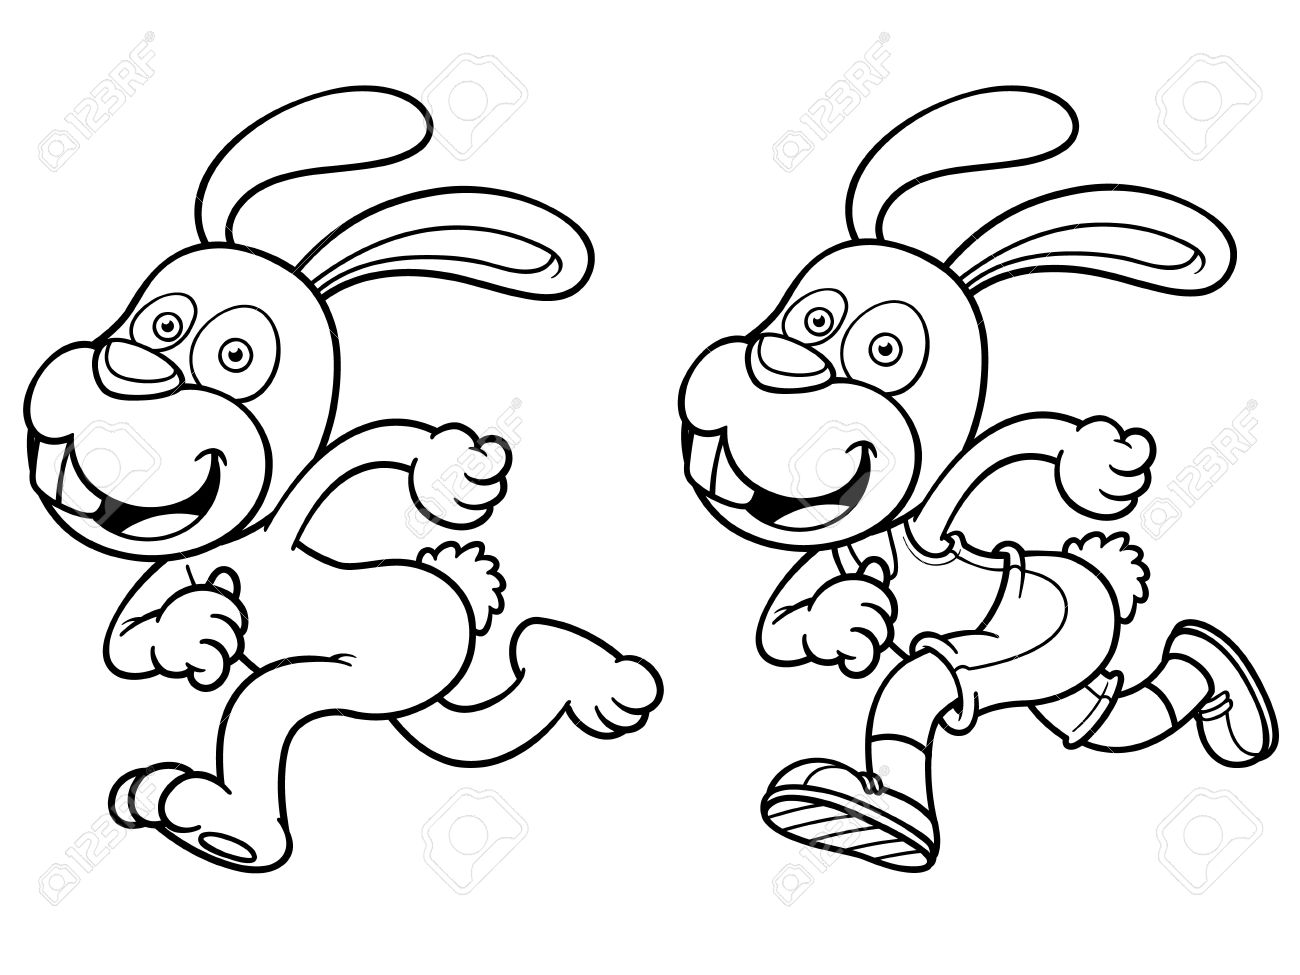 Running Rabbit Drawing at GetDrawings | Free download